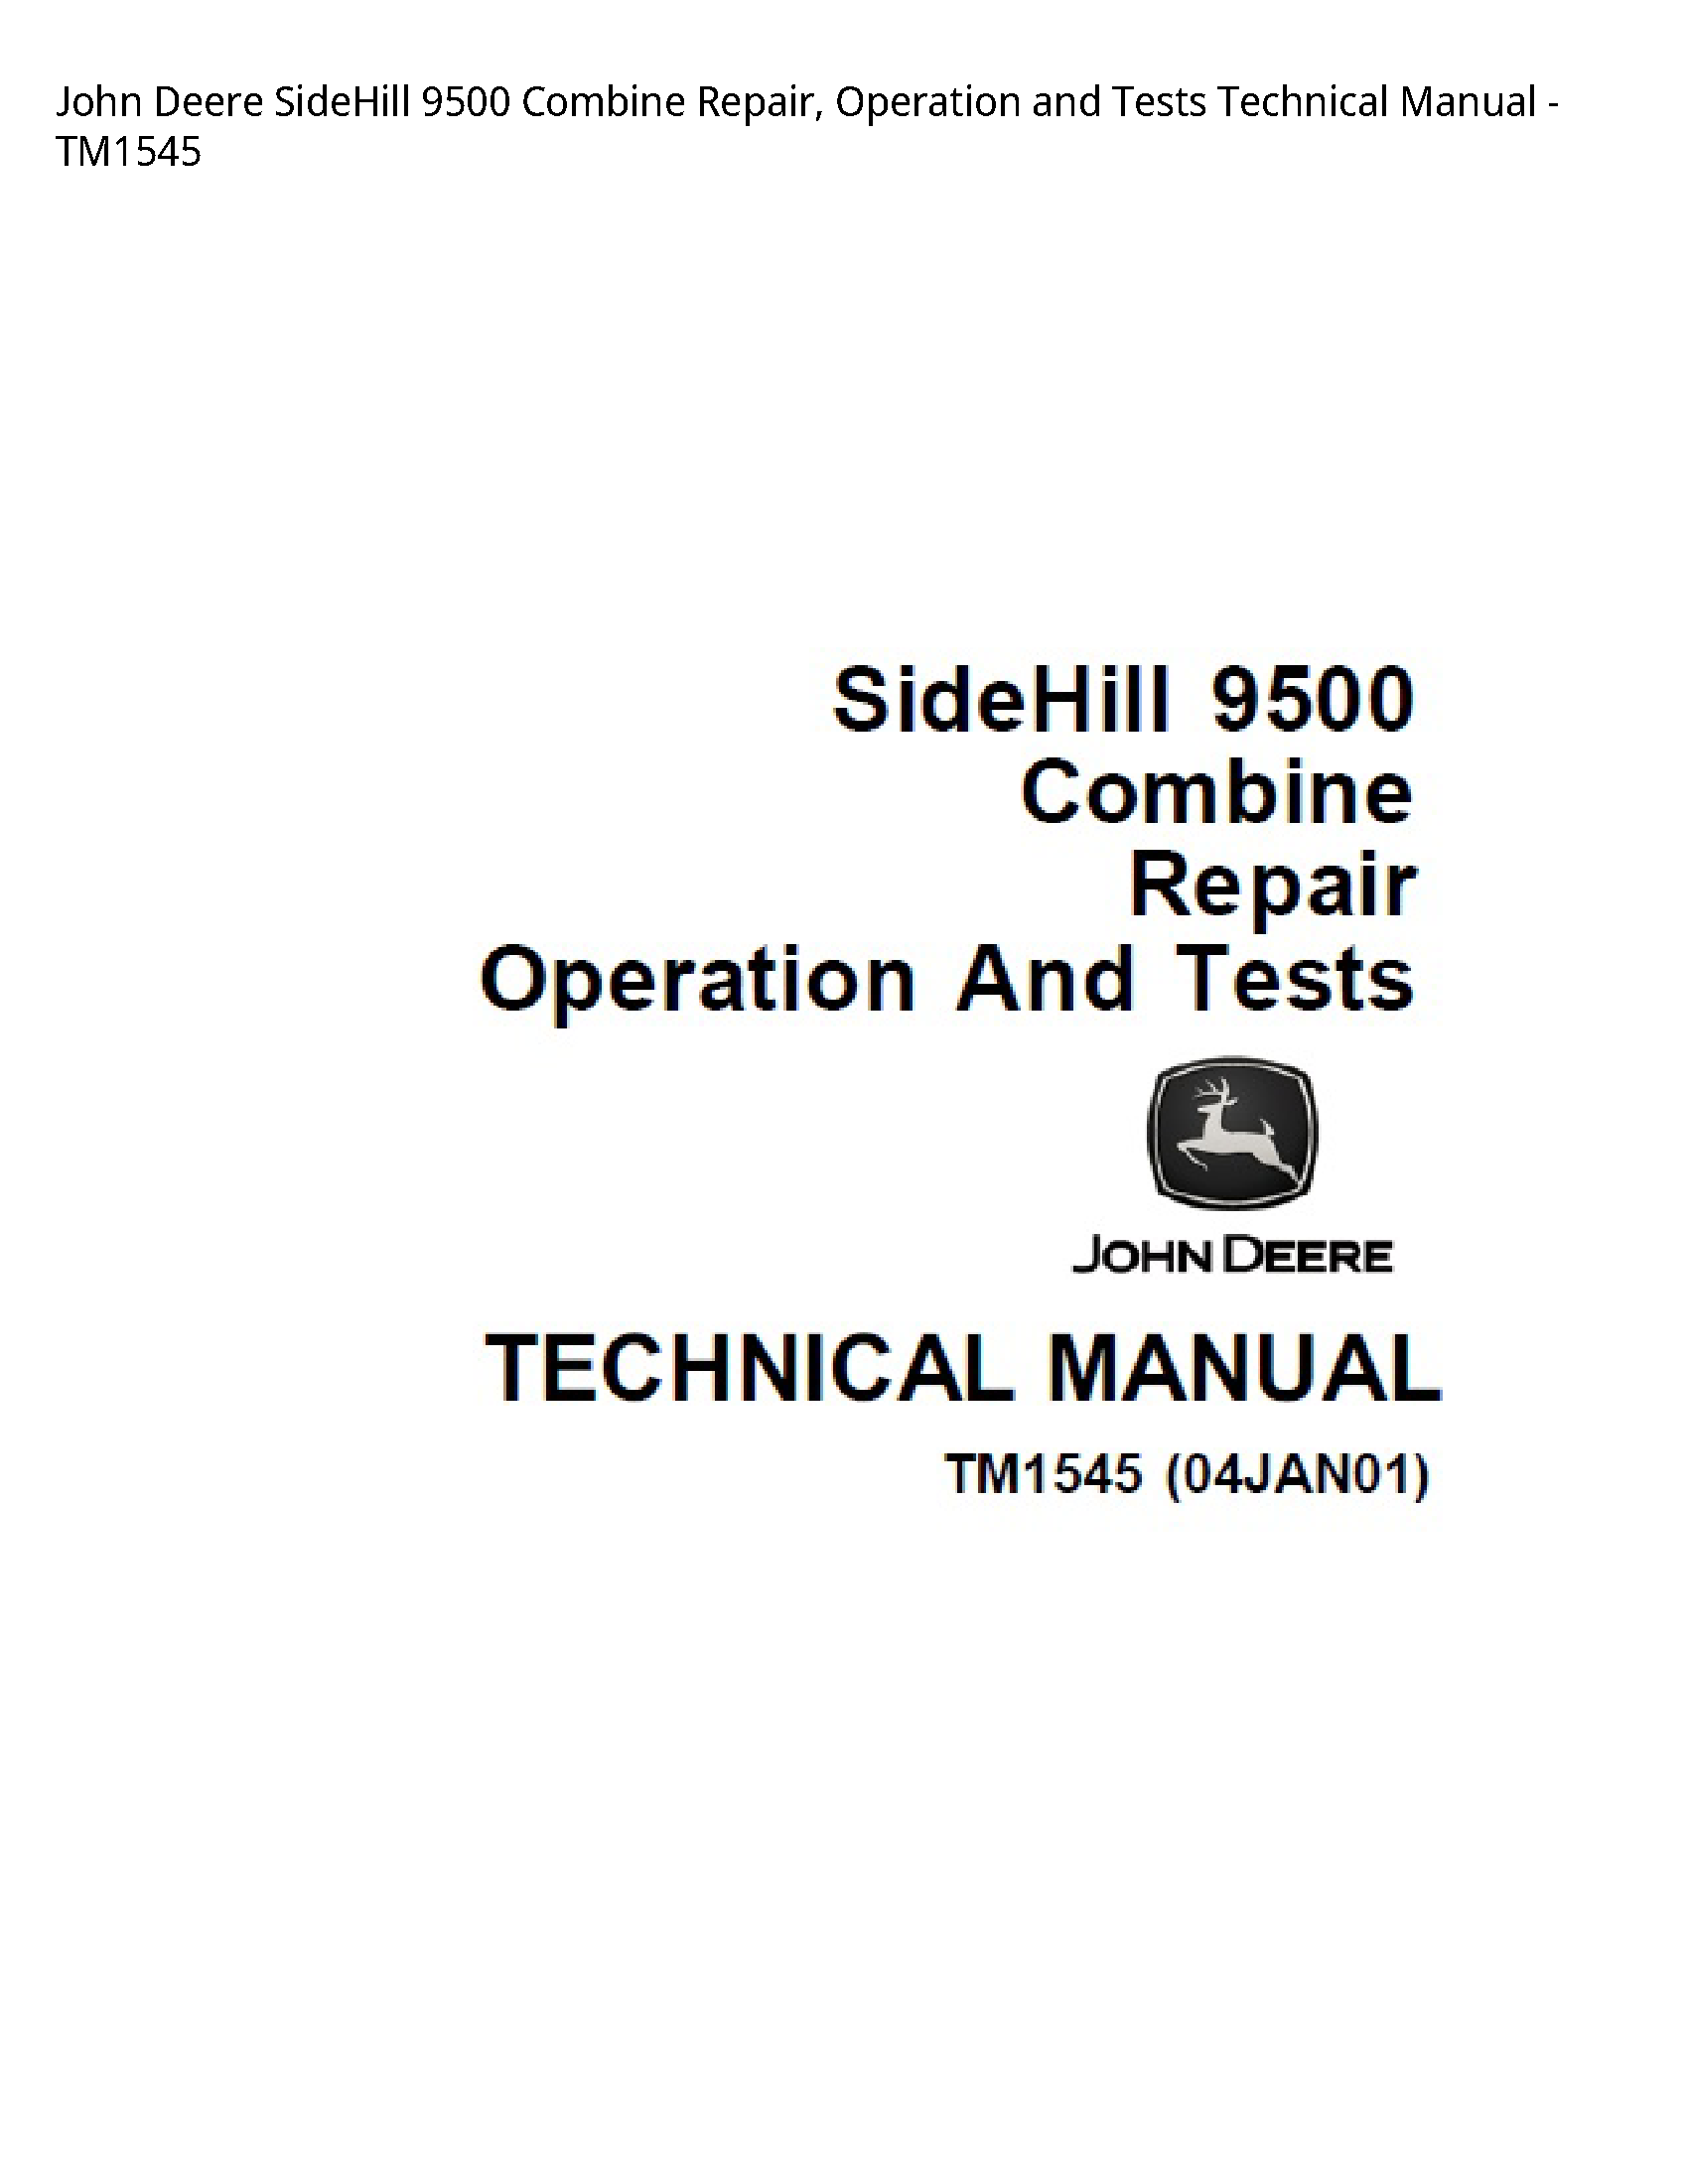 John Deere SideHill 9500 Combine Repair  Operation and Tests Technical Manual - TM1545